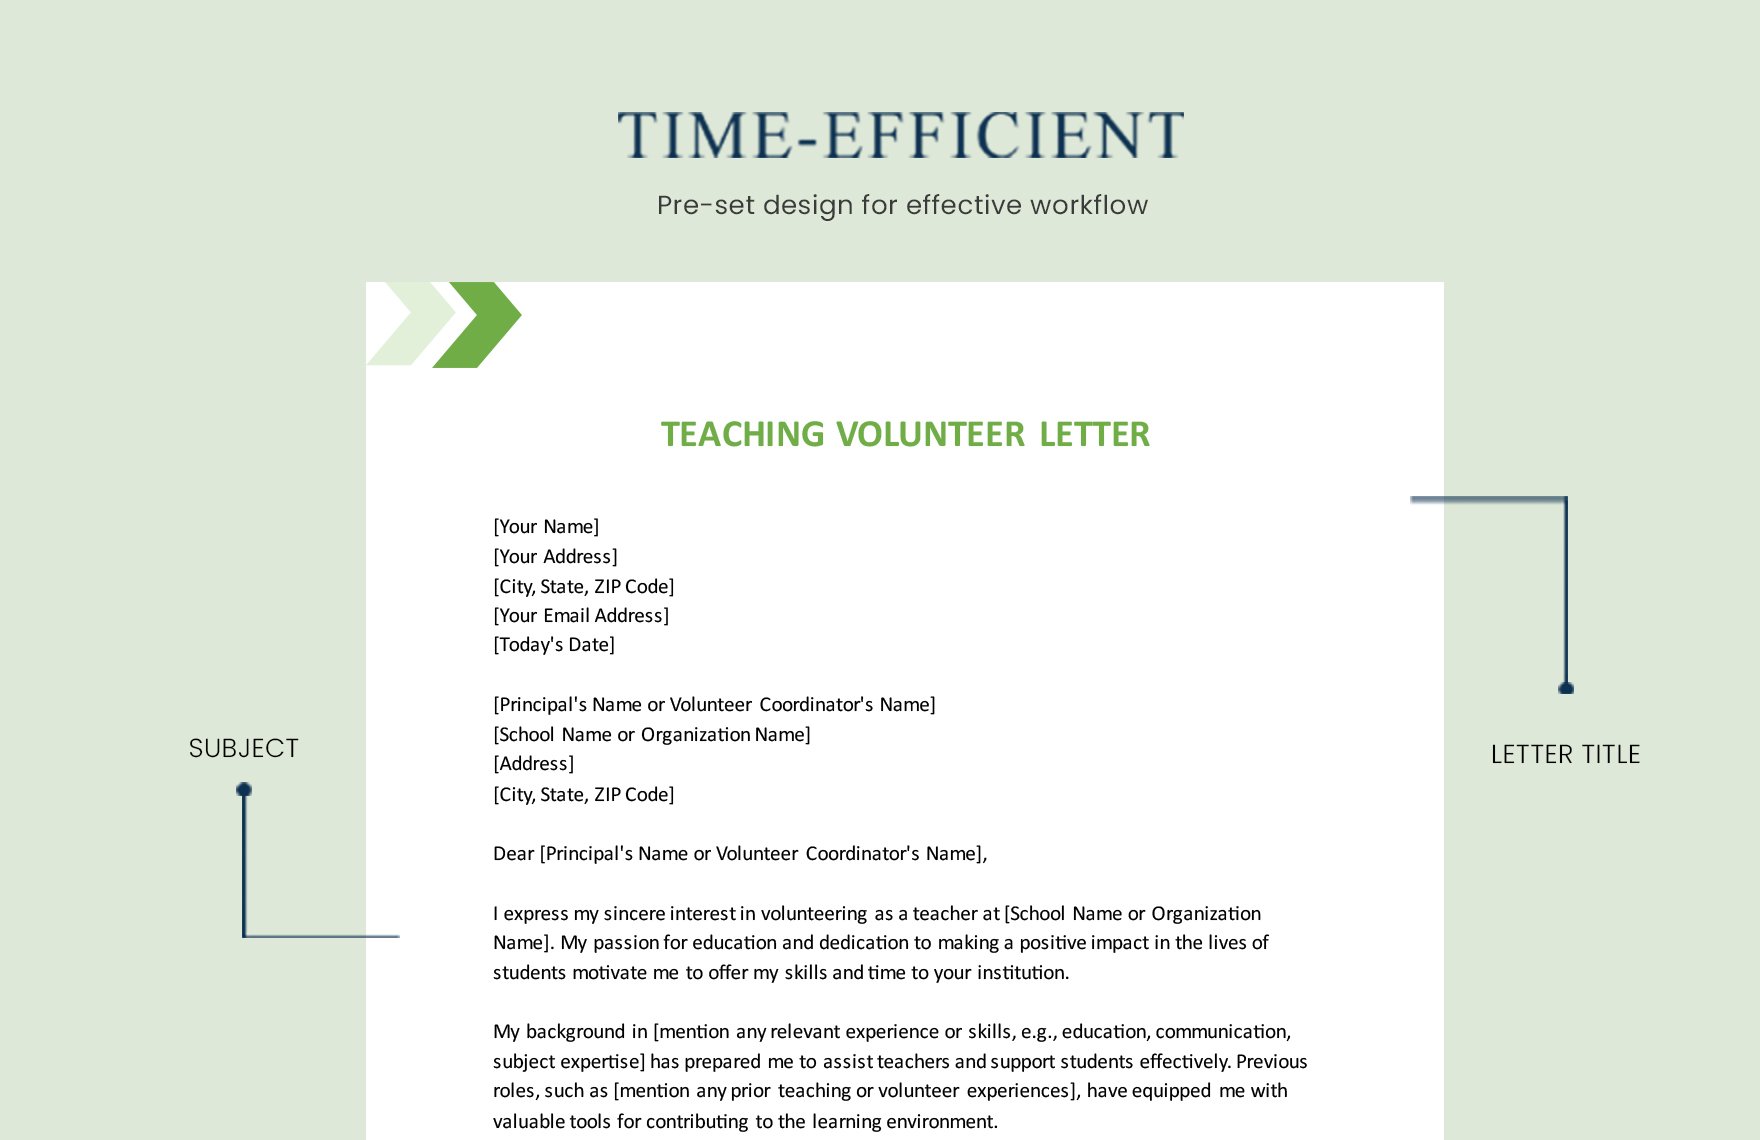 Teaching Volunteer Letter